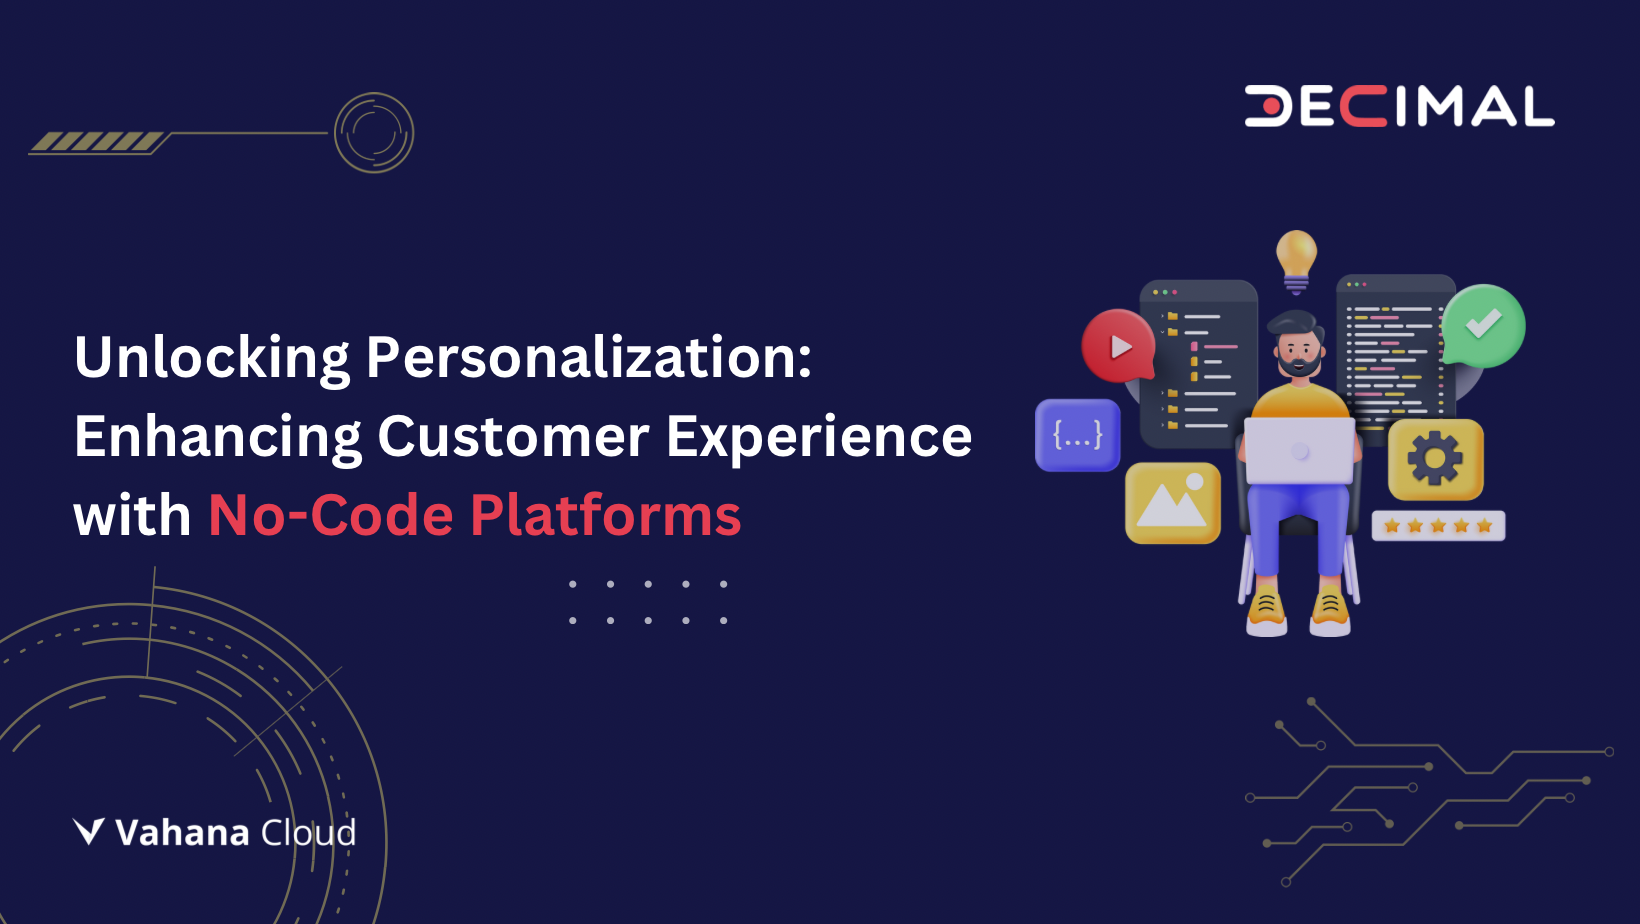 customer experience on no-code platform